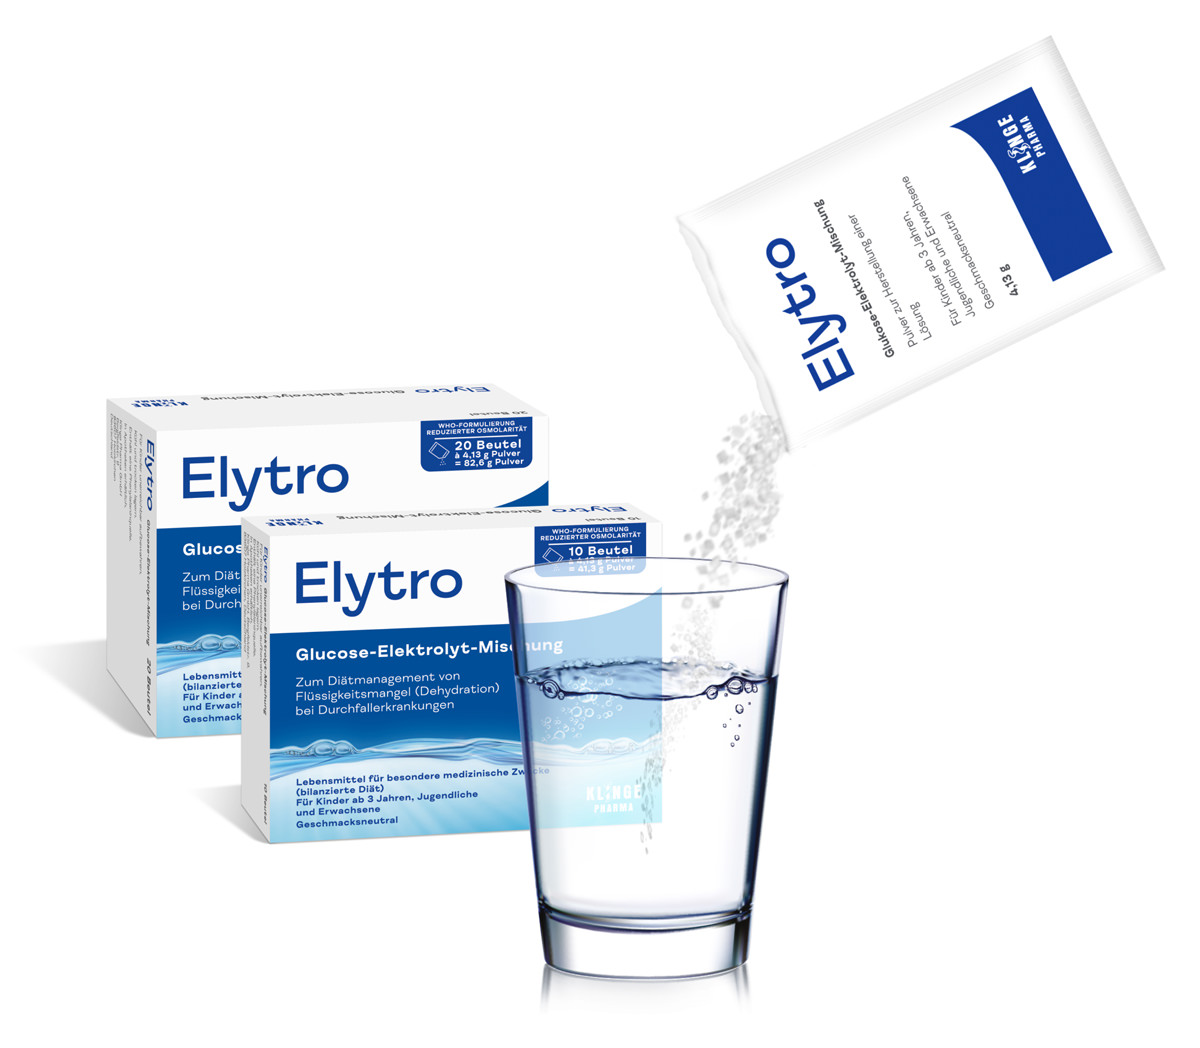 Elytro - Glucose-Elektrolyt-Mischung bei akutem Durchfall